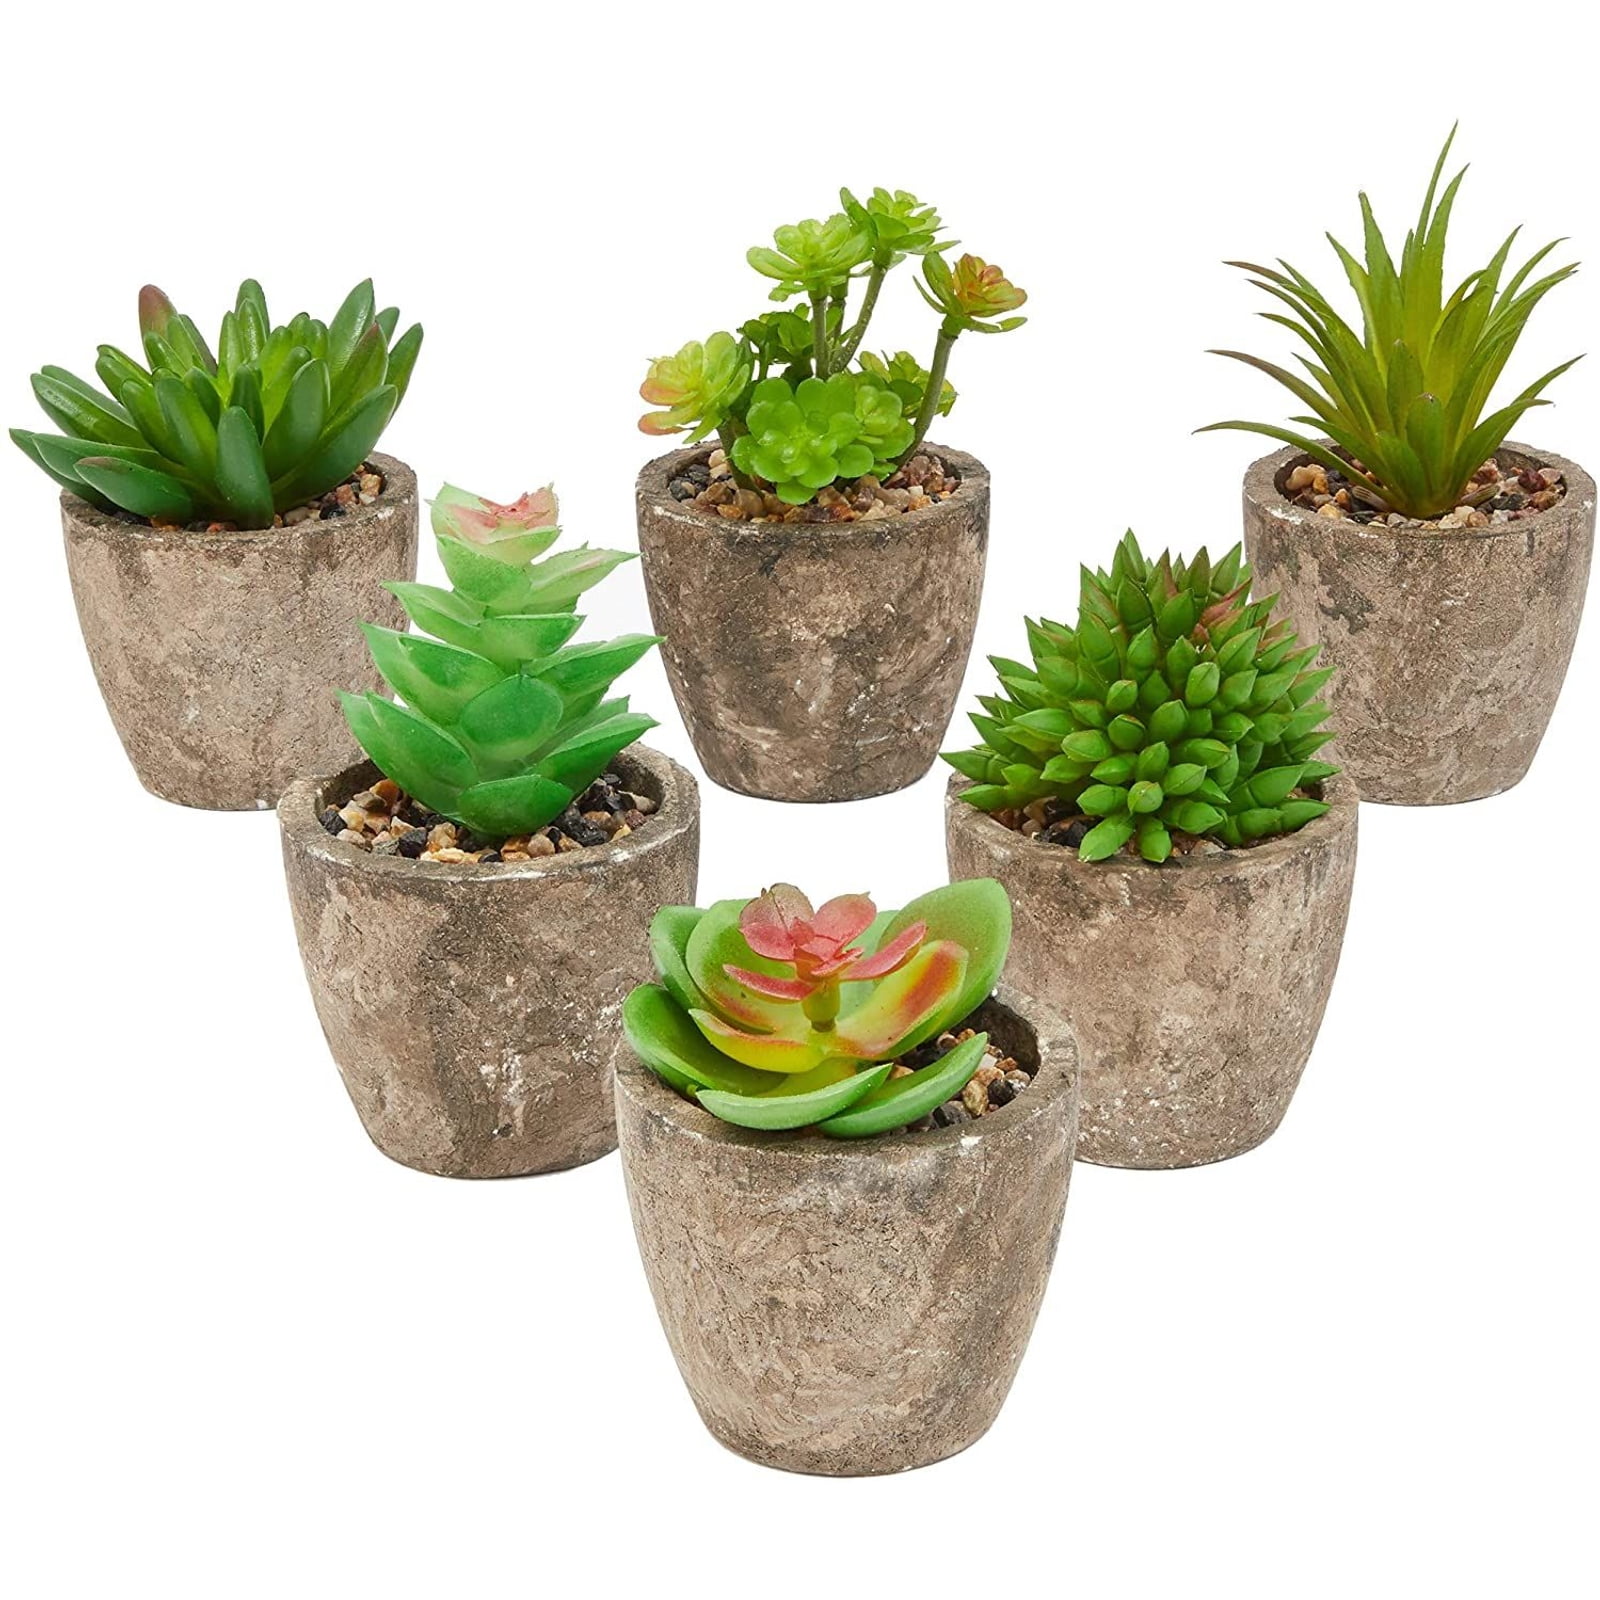 Artificial Faux Succulent Cactus Cacti Plant in Concrete Pot Indoor Garden Gift 